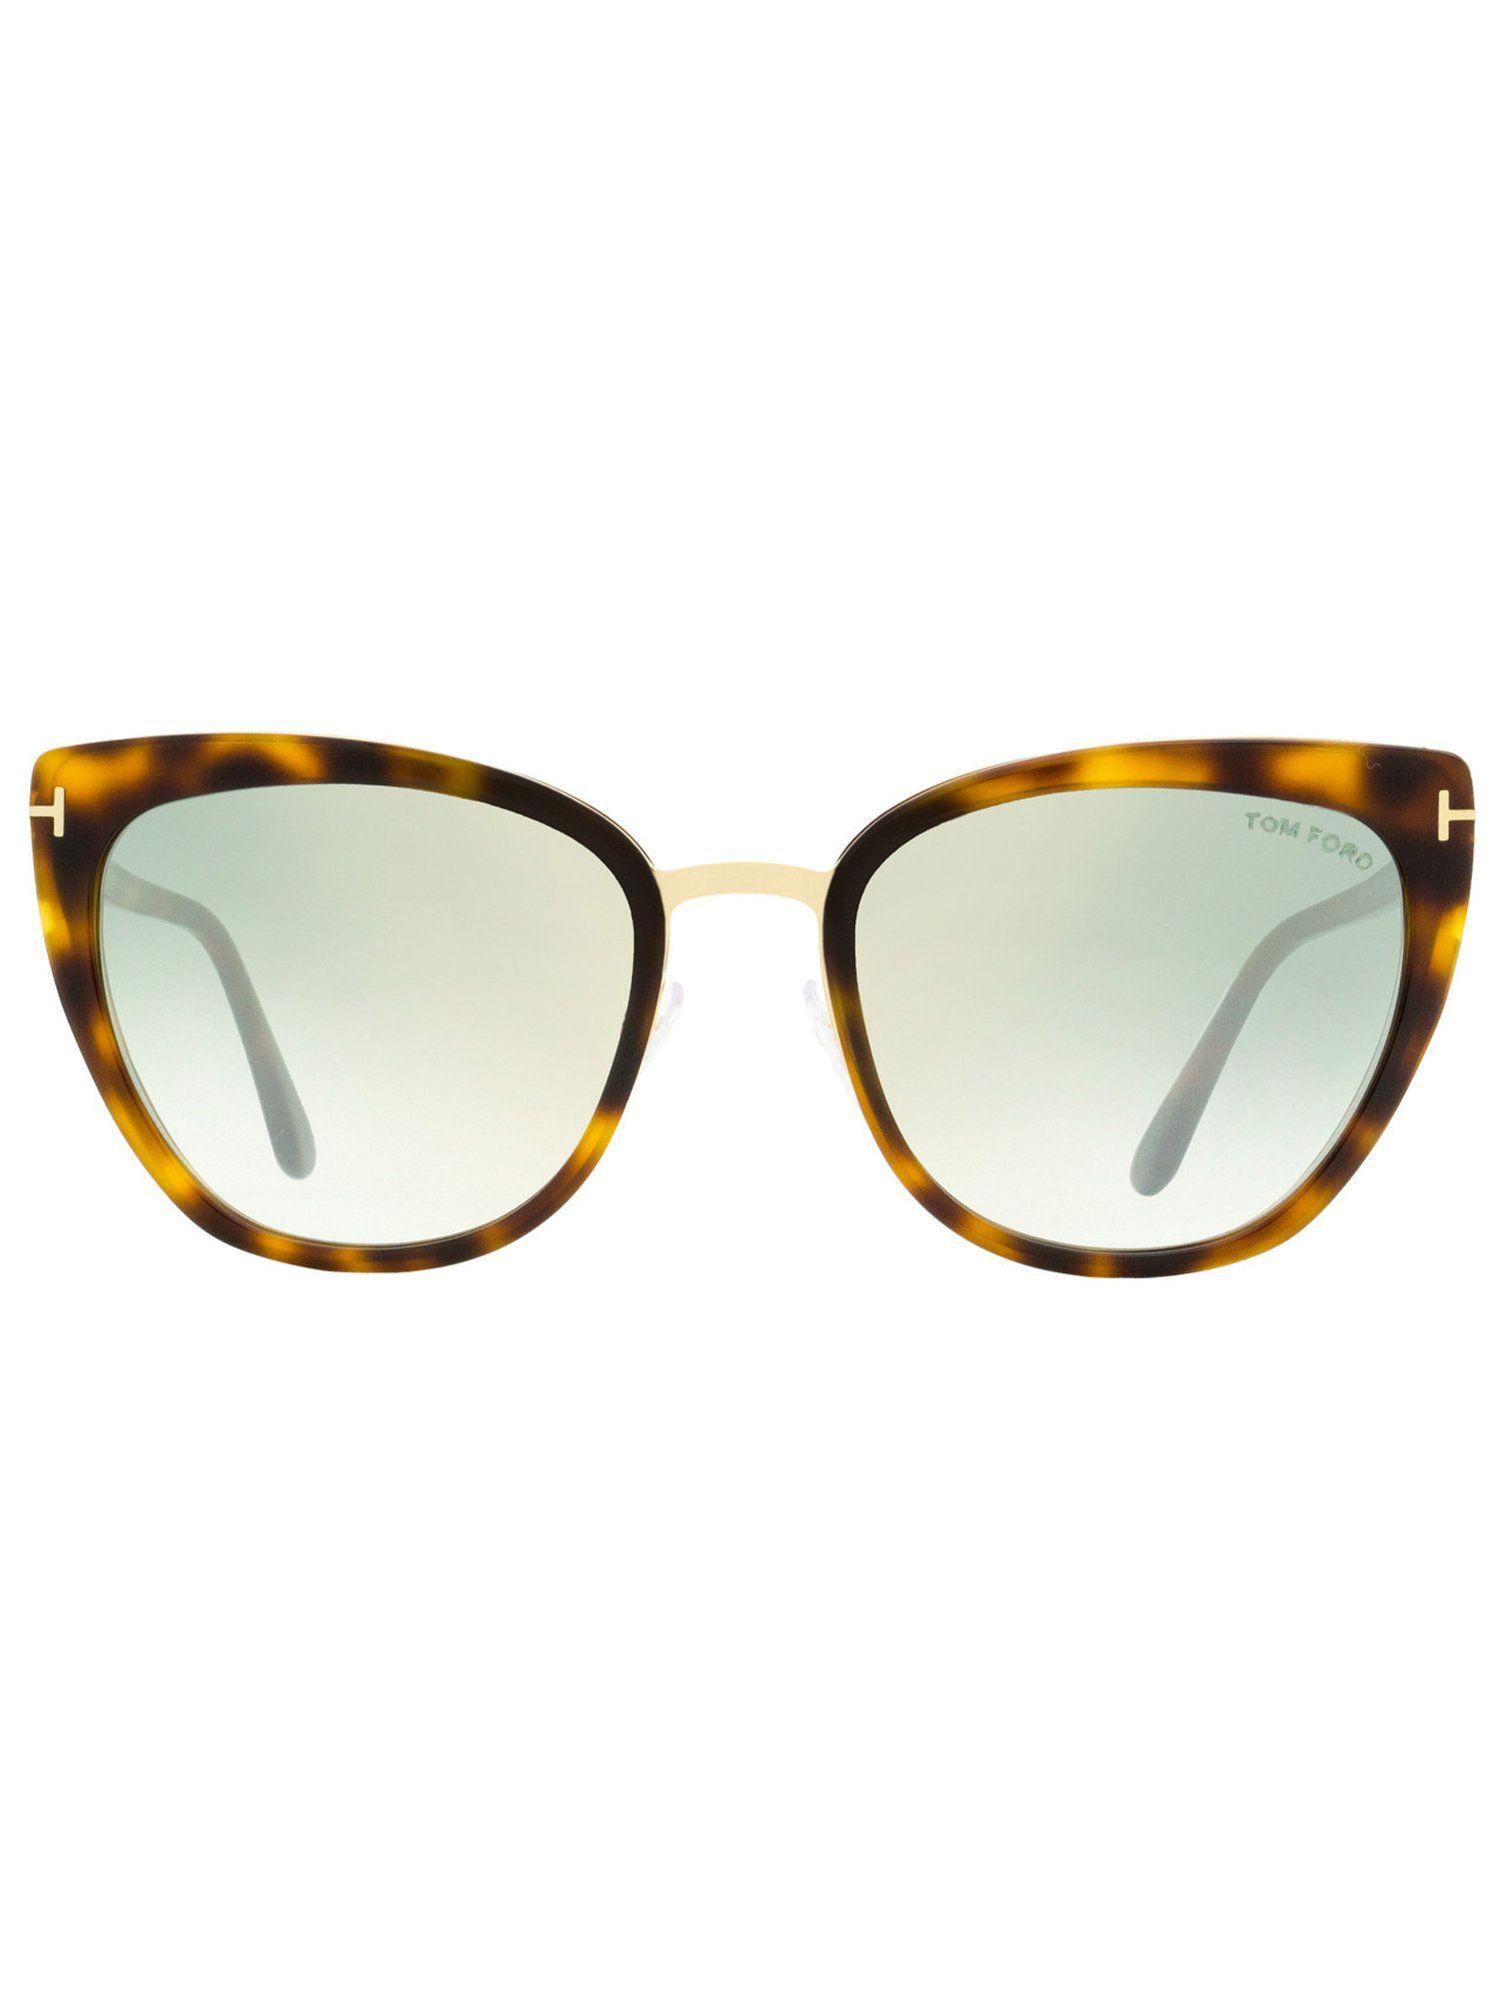 brown cat eye sunglasses - ft0717 57 53q